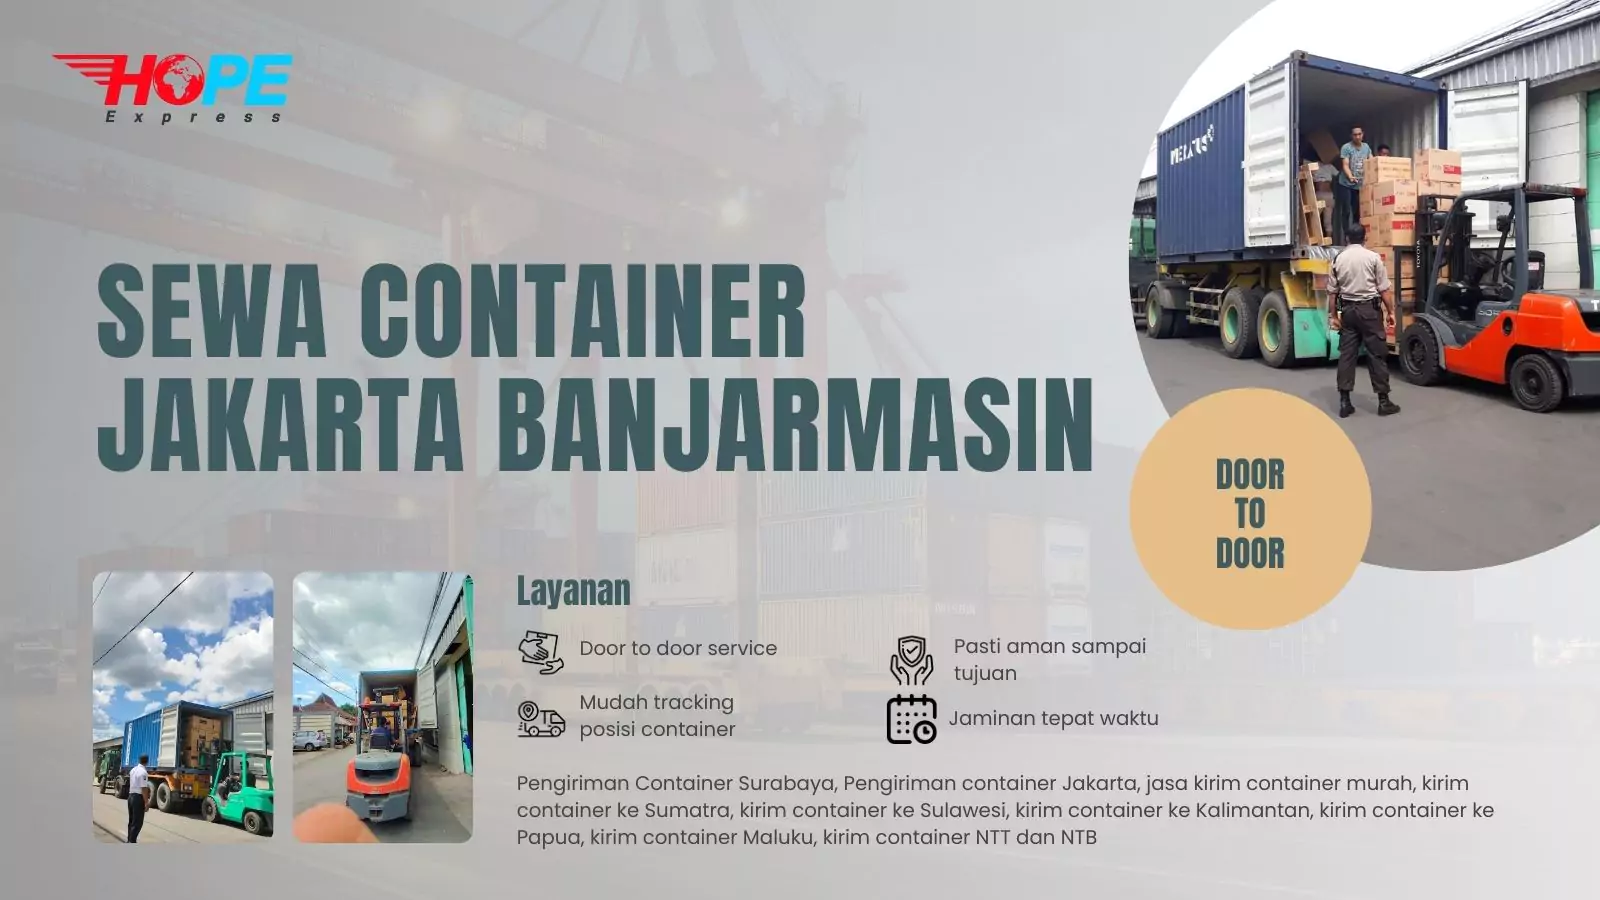 Sewa Container Jakarta Banjarmasin